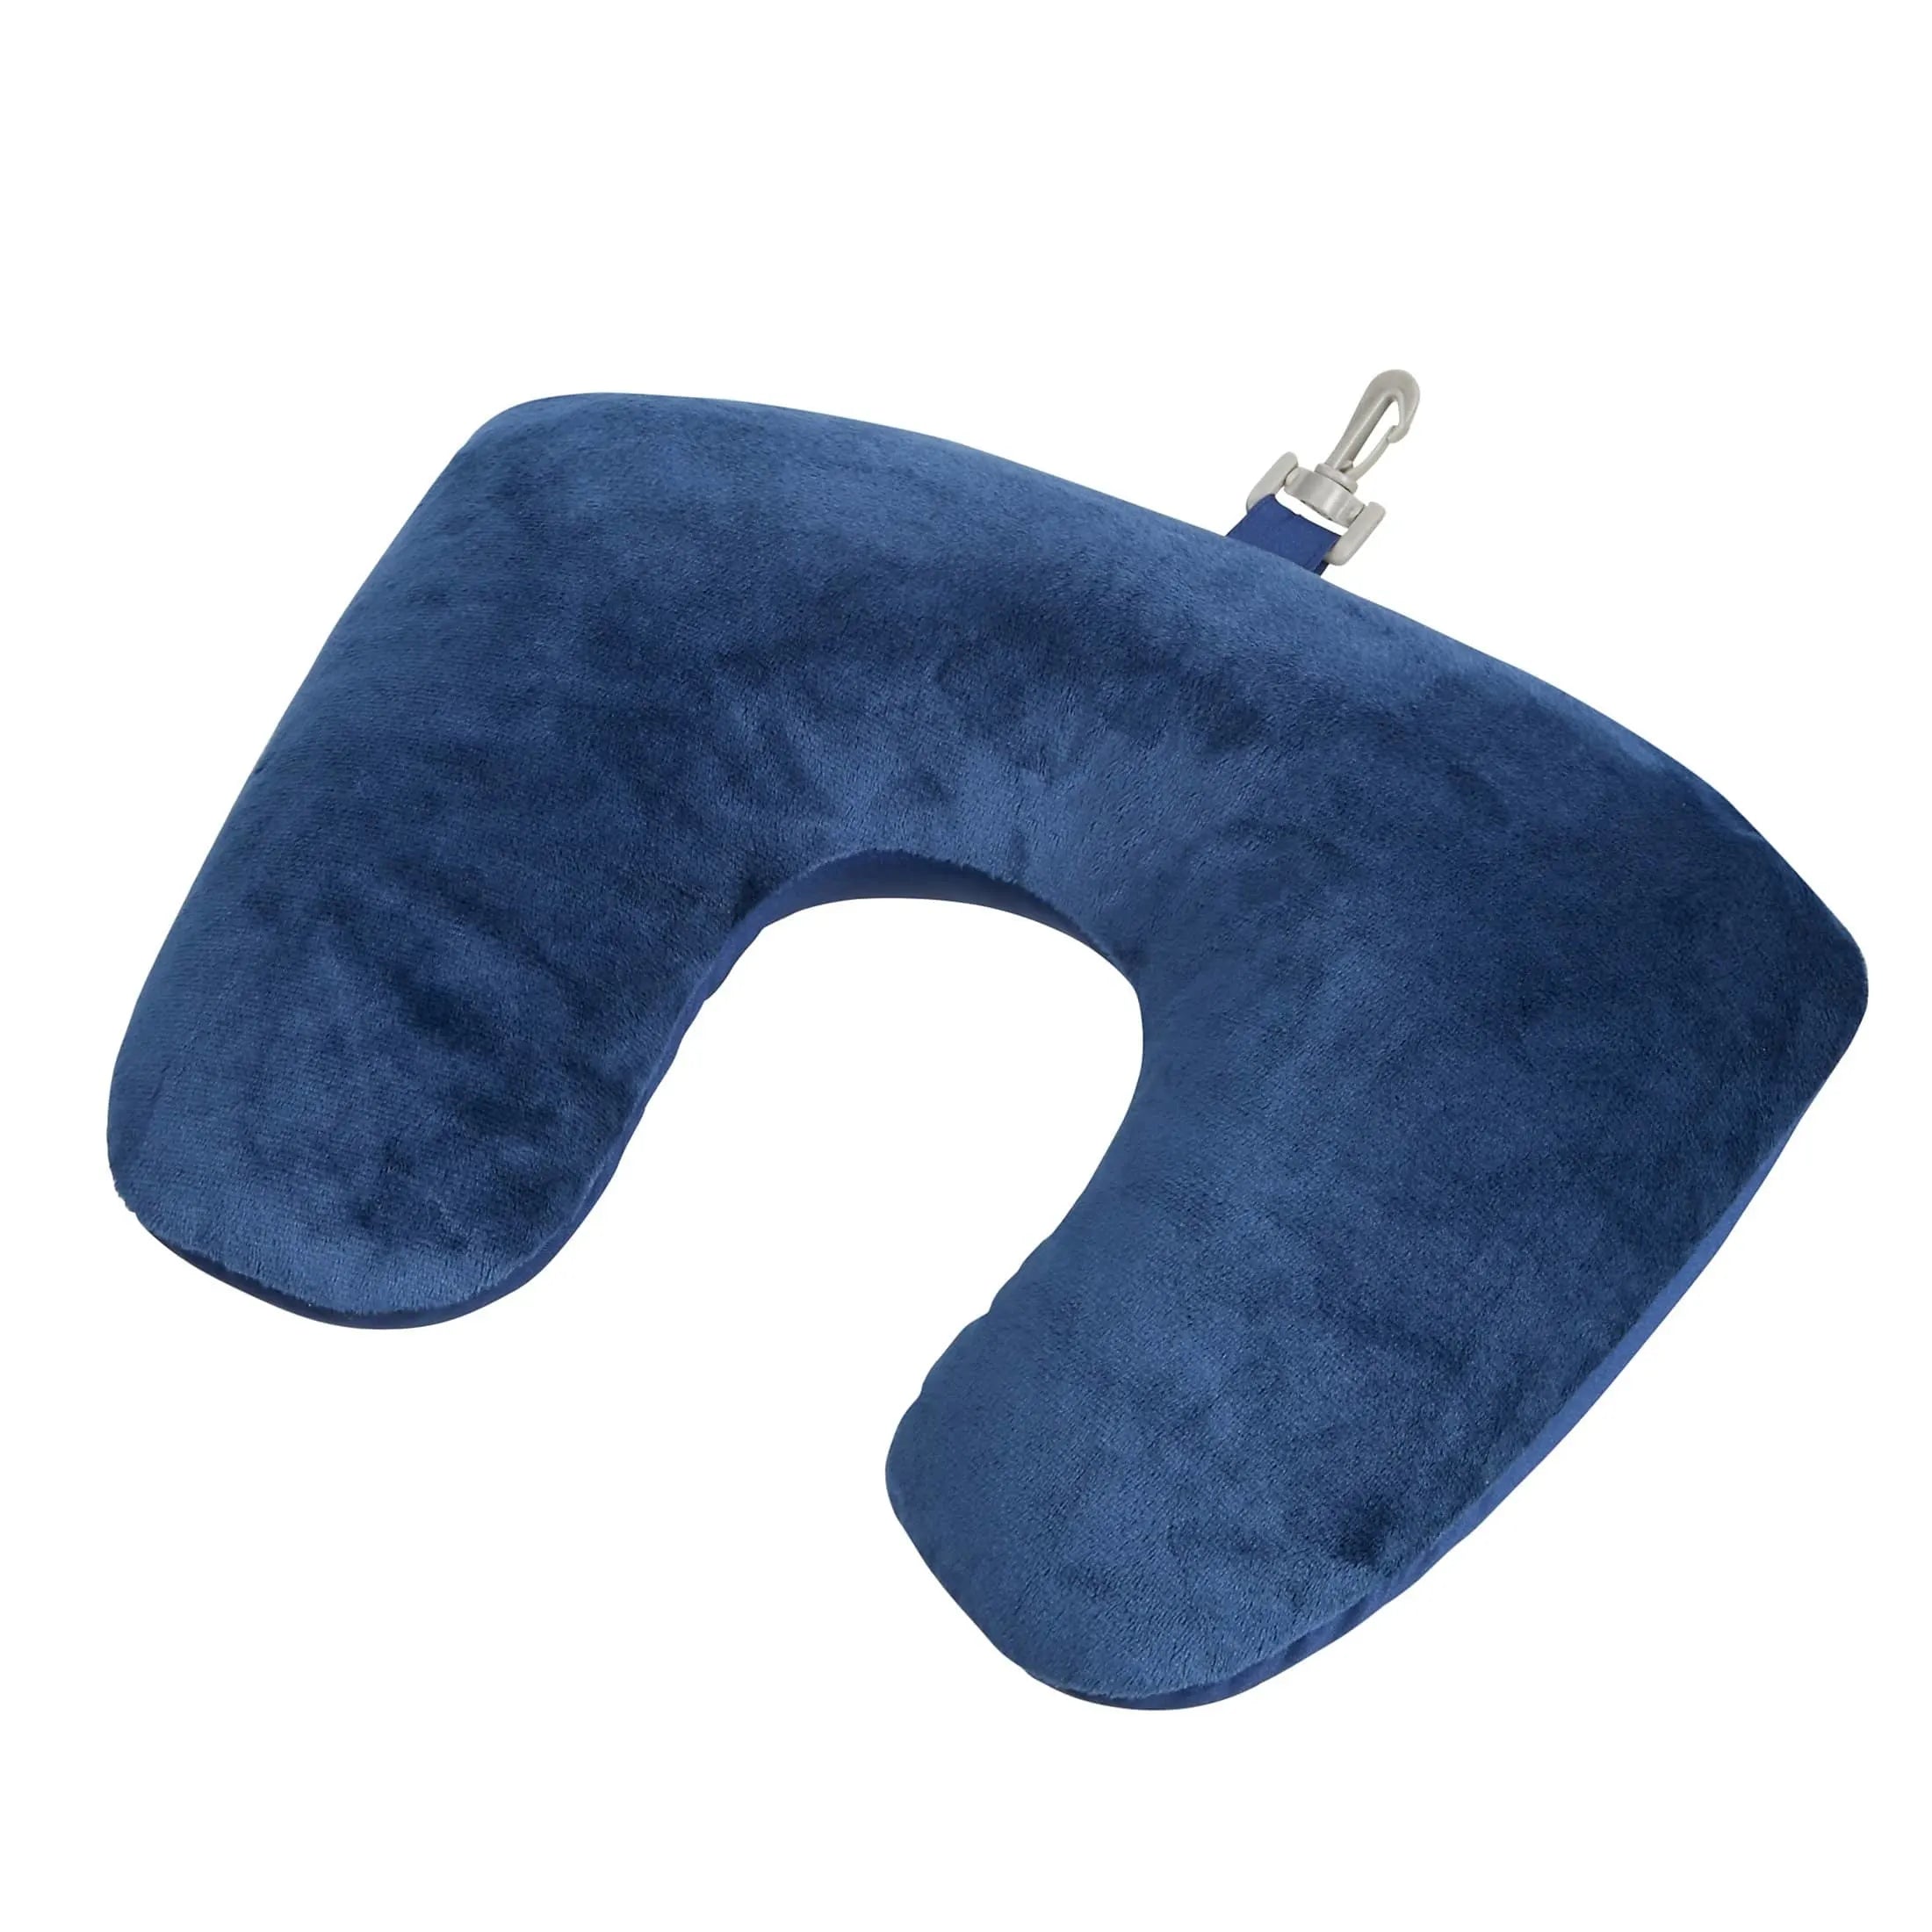 Samsonite Travel Accessories Reversible travel pillow - midnight blue